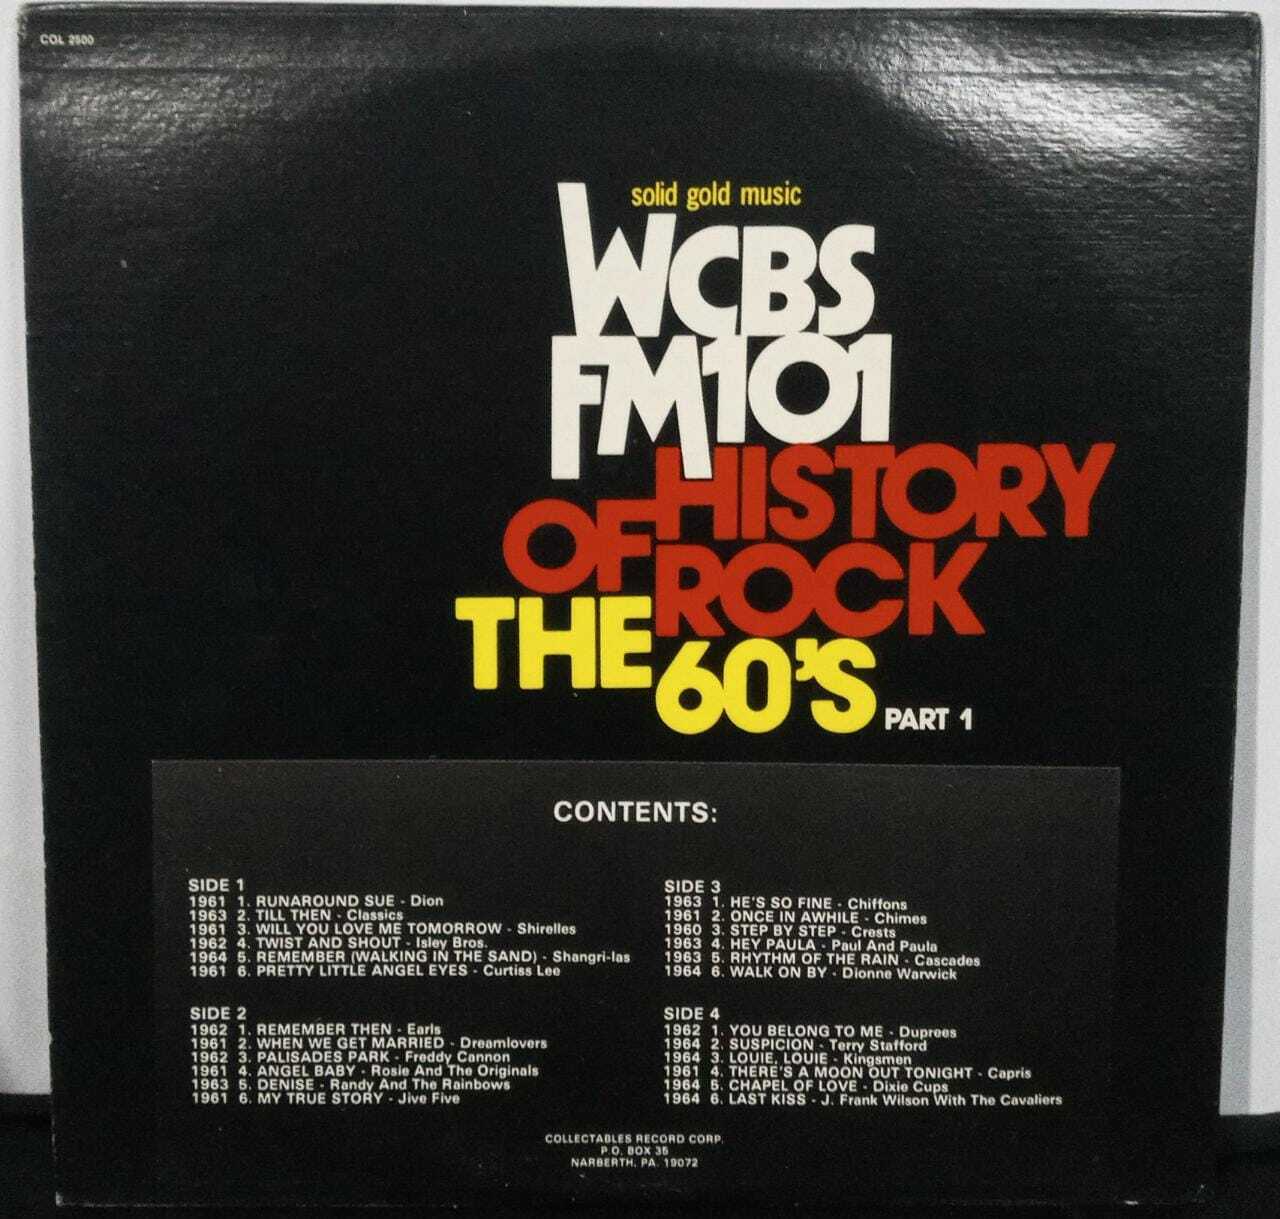 Vinil - WCBS fm101 History Of Rock - The 60s (duplo/USA)